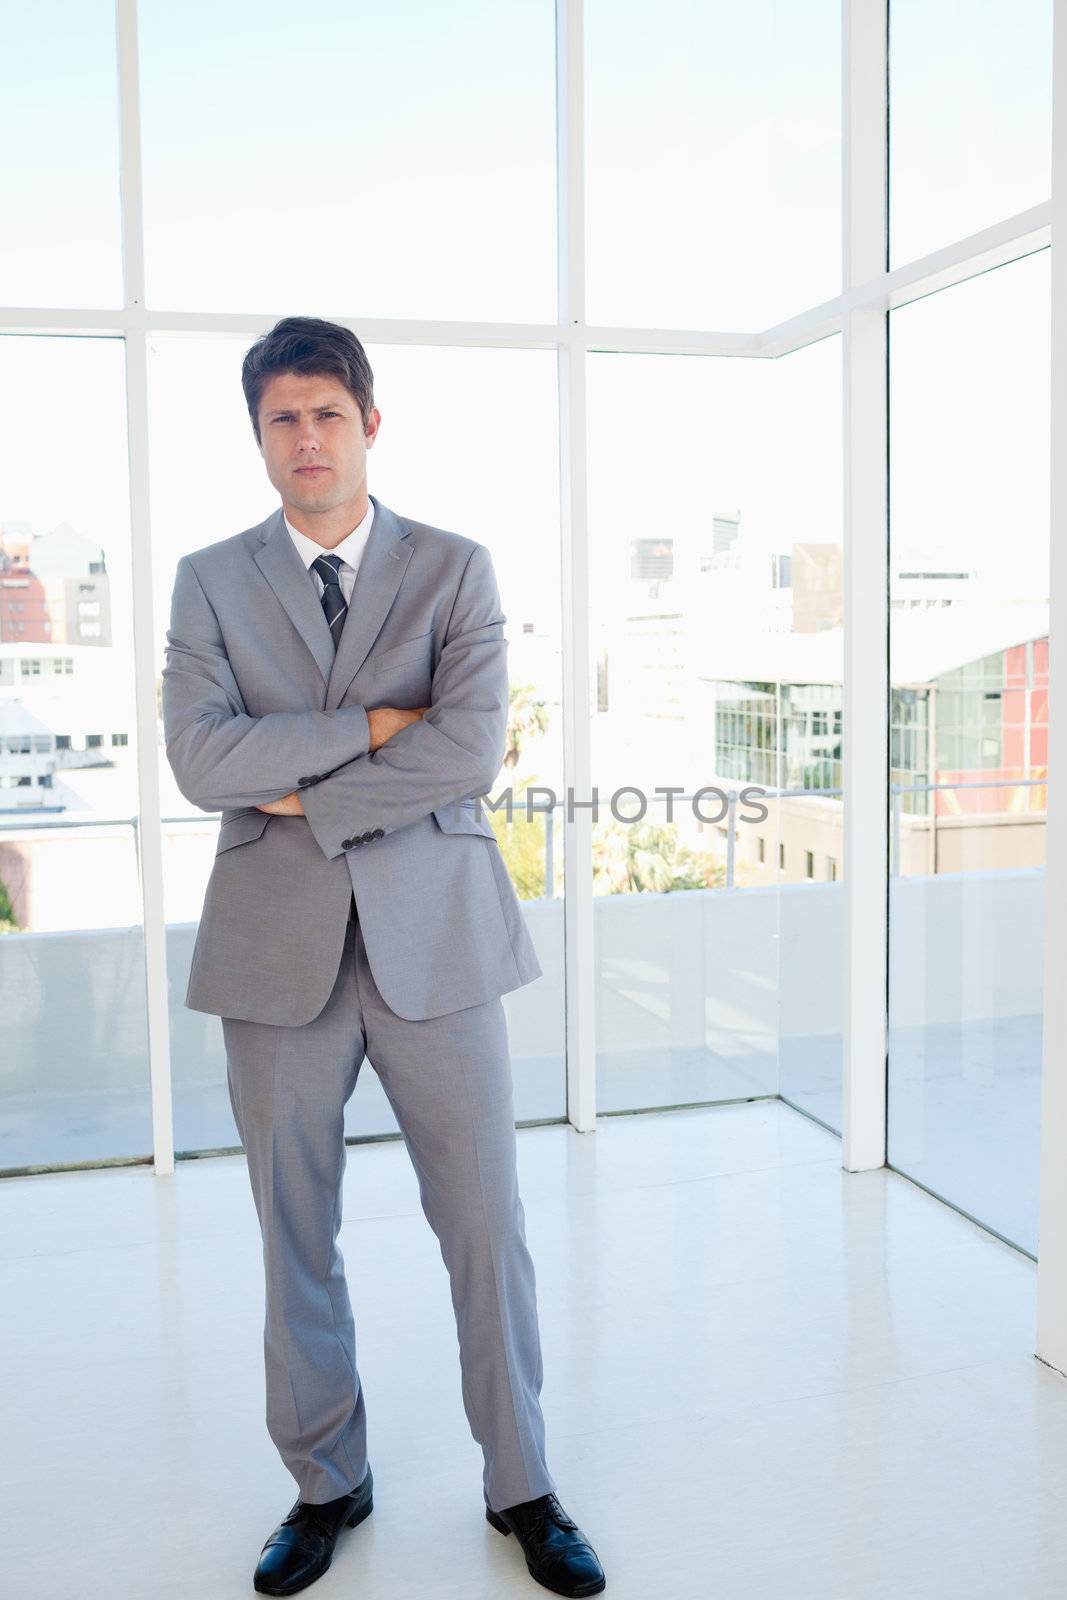 Stern businessman standing in a well-lit area by Wavebreakmedia